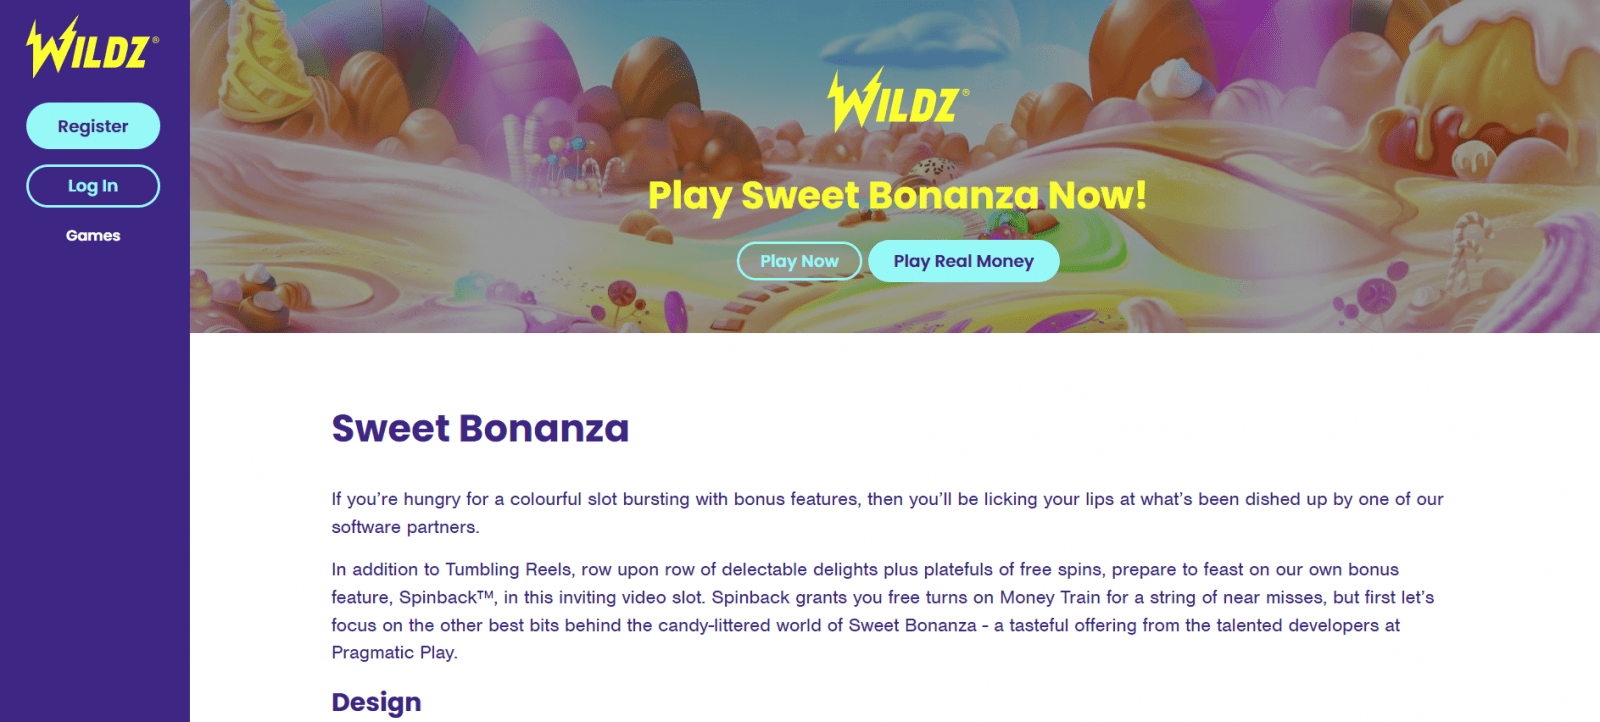 wildz online casino